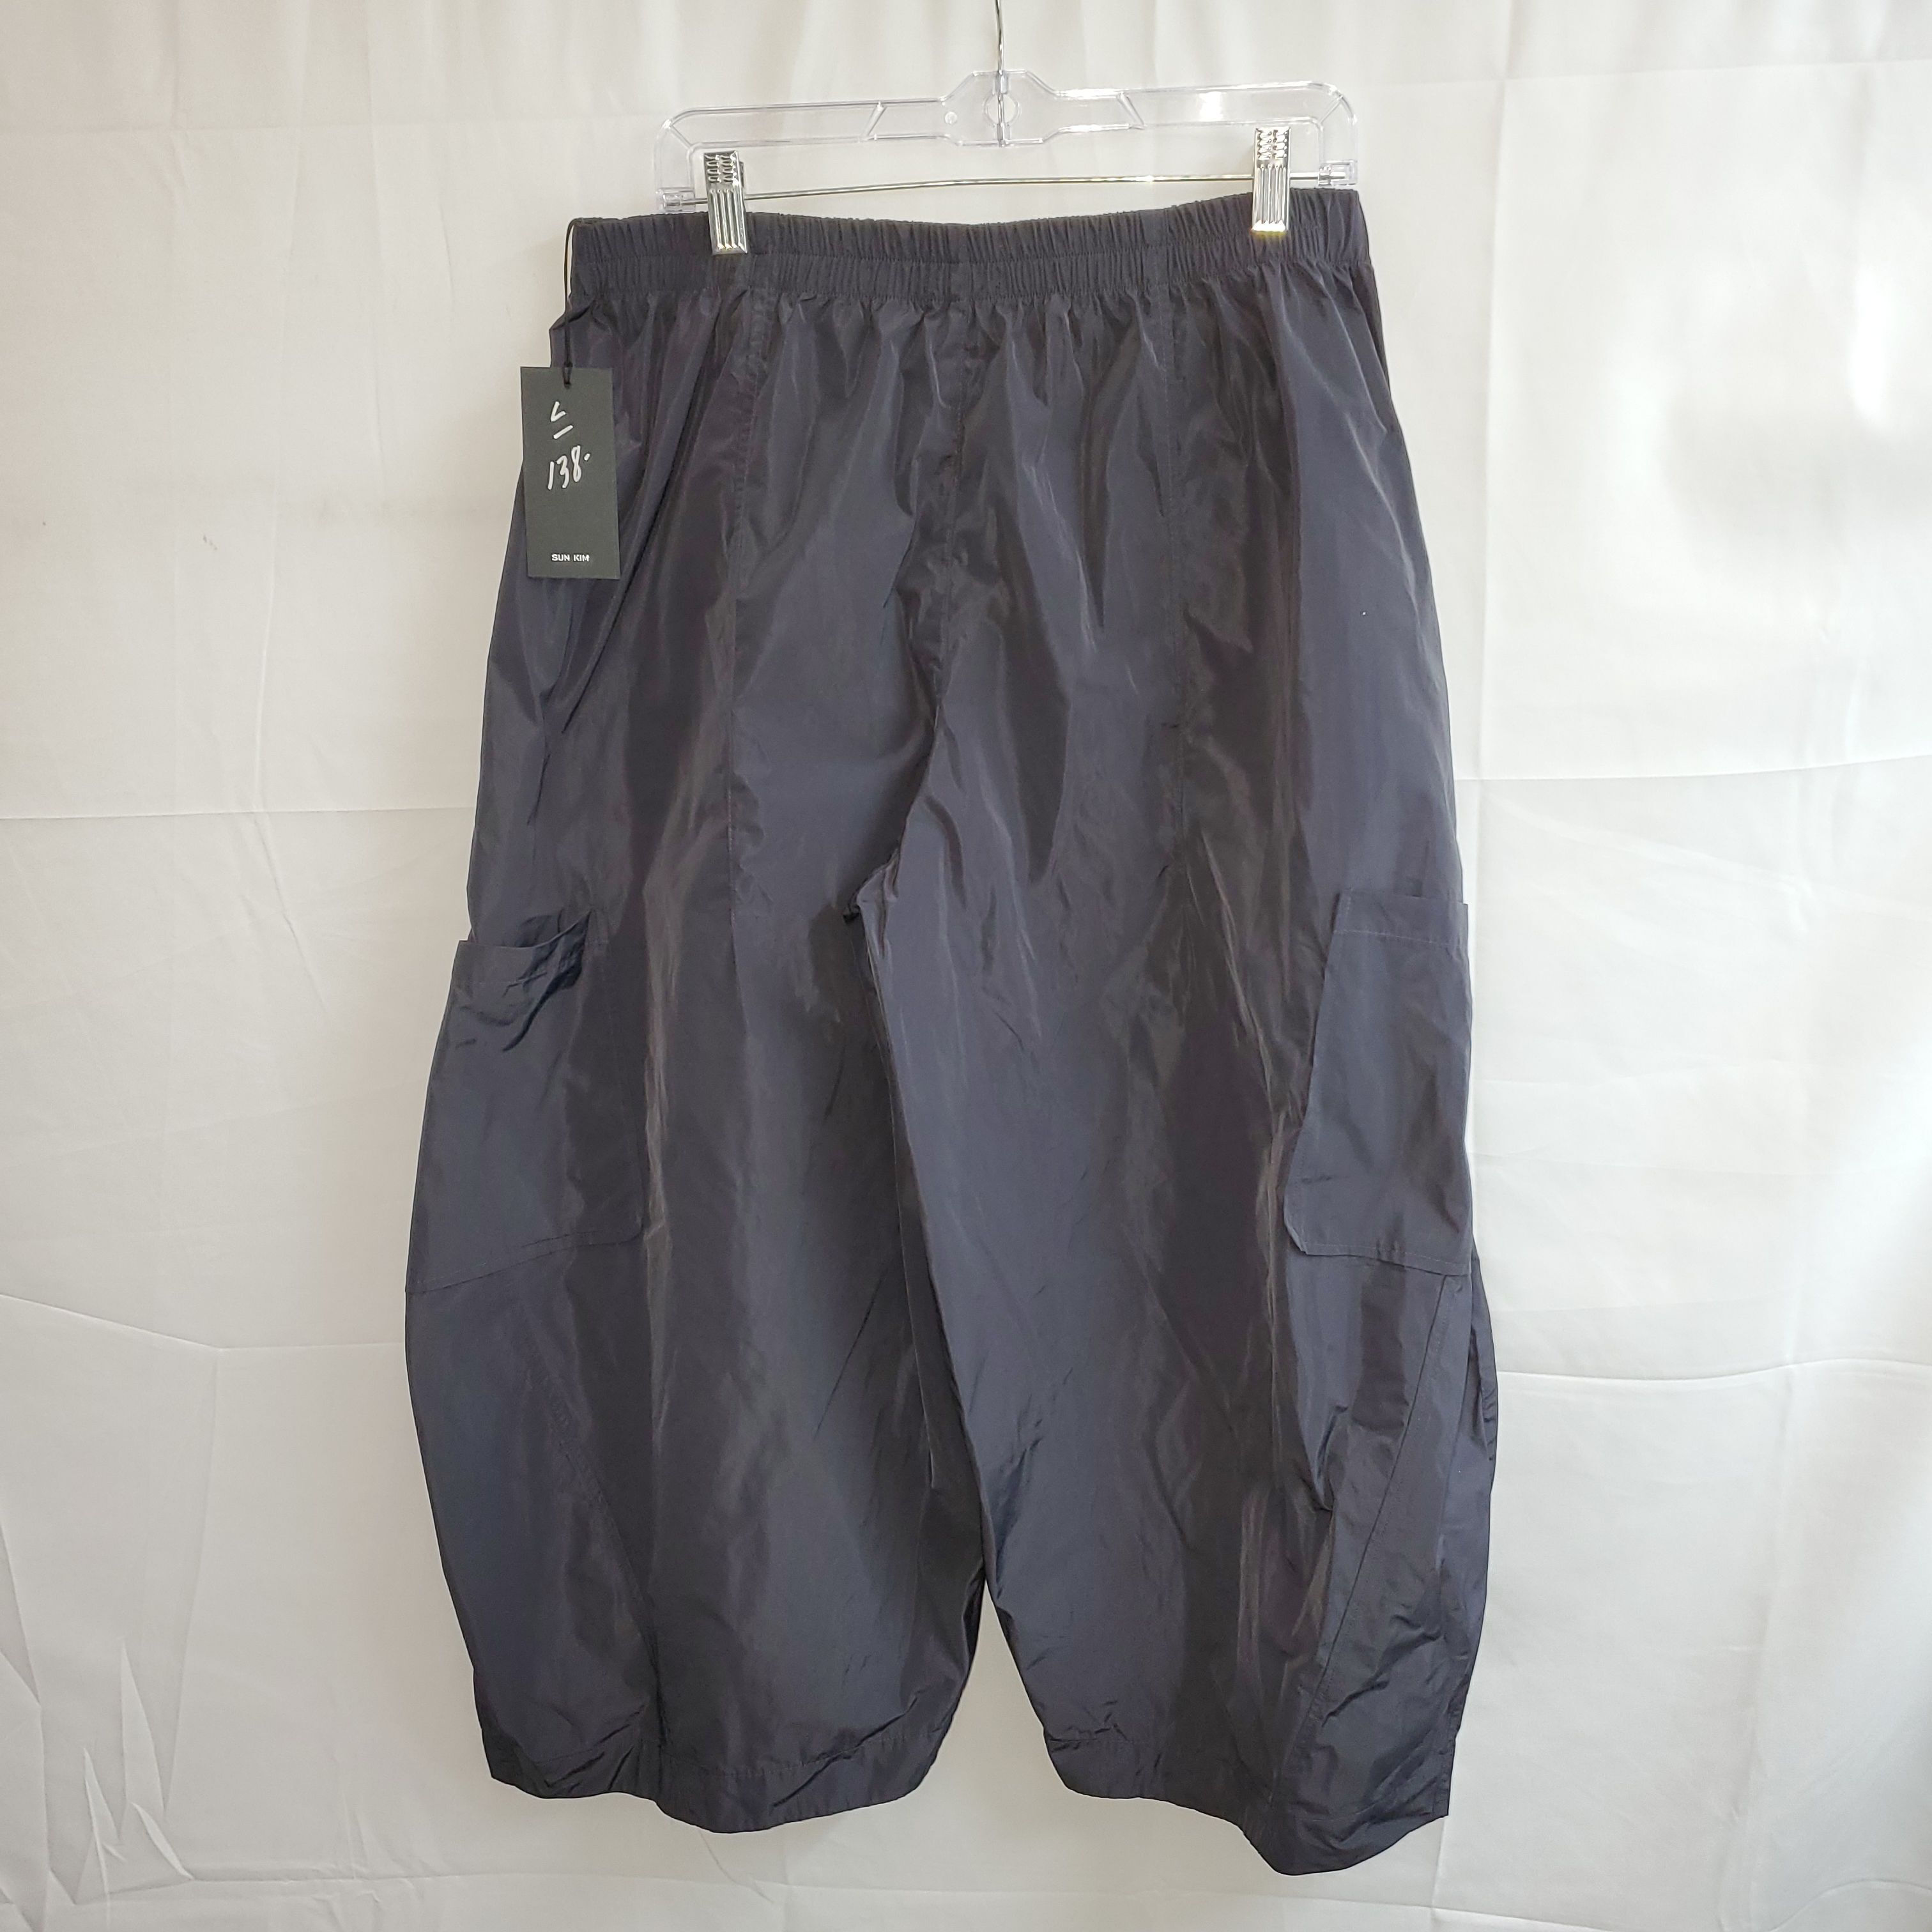 Bandage Trousers Men Harem Pants Drawstring Pants Lace Up Pants Nordic  Pirate | eBay